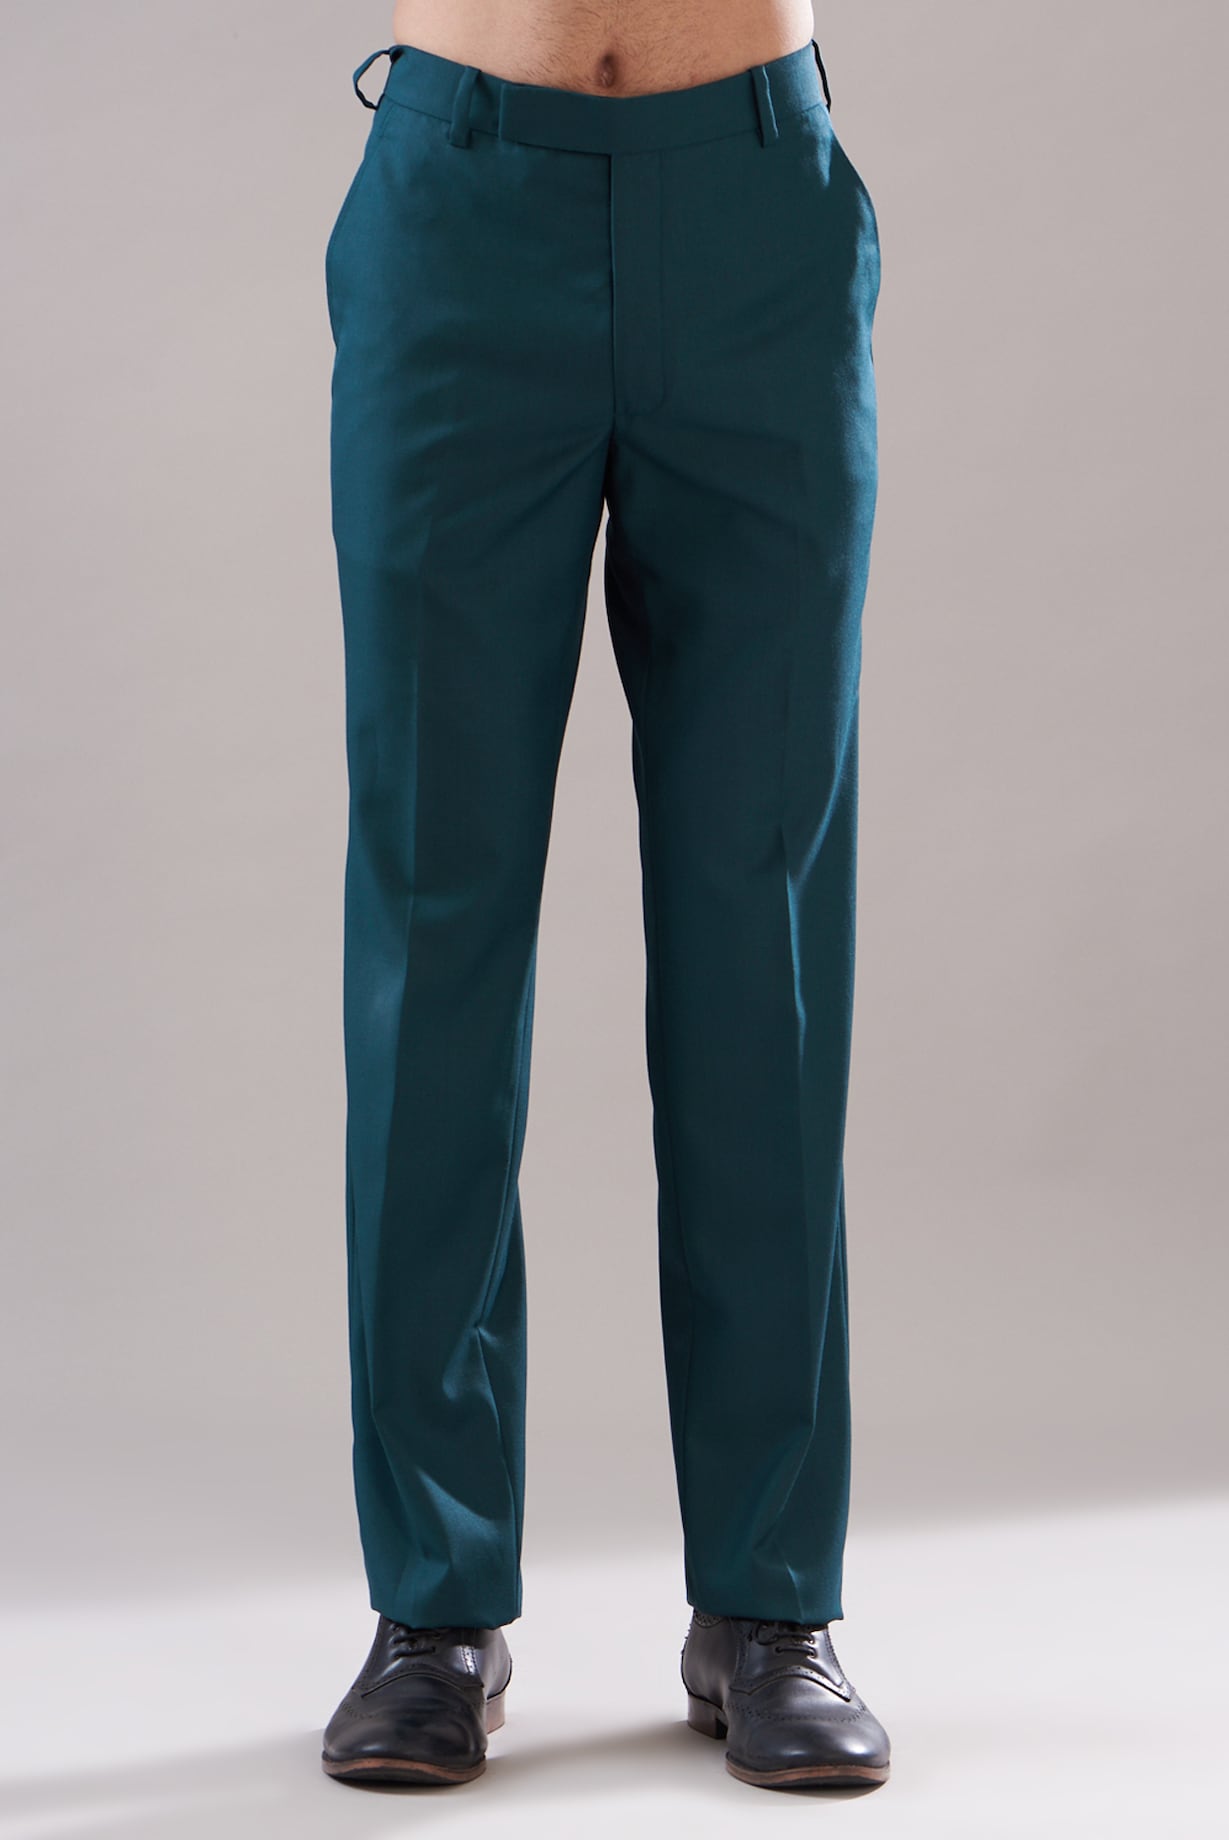 Buy Design O Stitch Men Cobalt Blue Suiting Blazer Set at Pernia ...